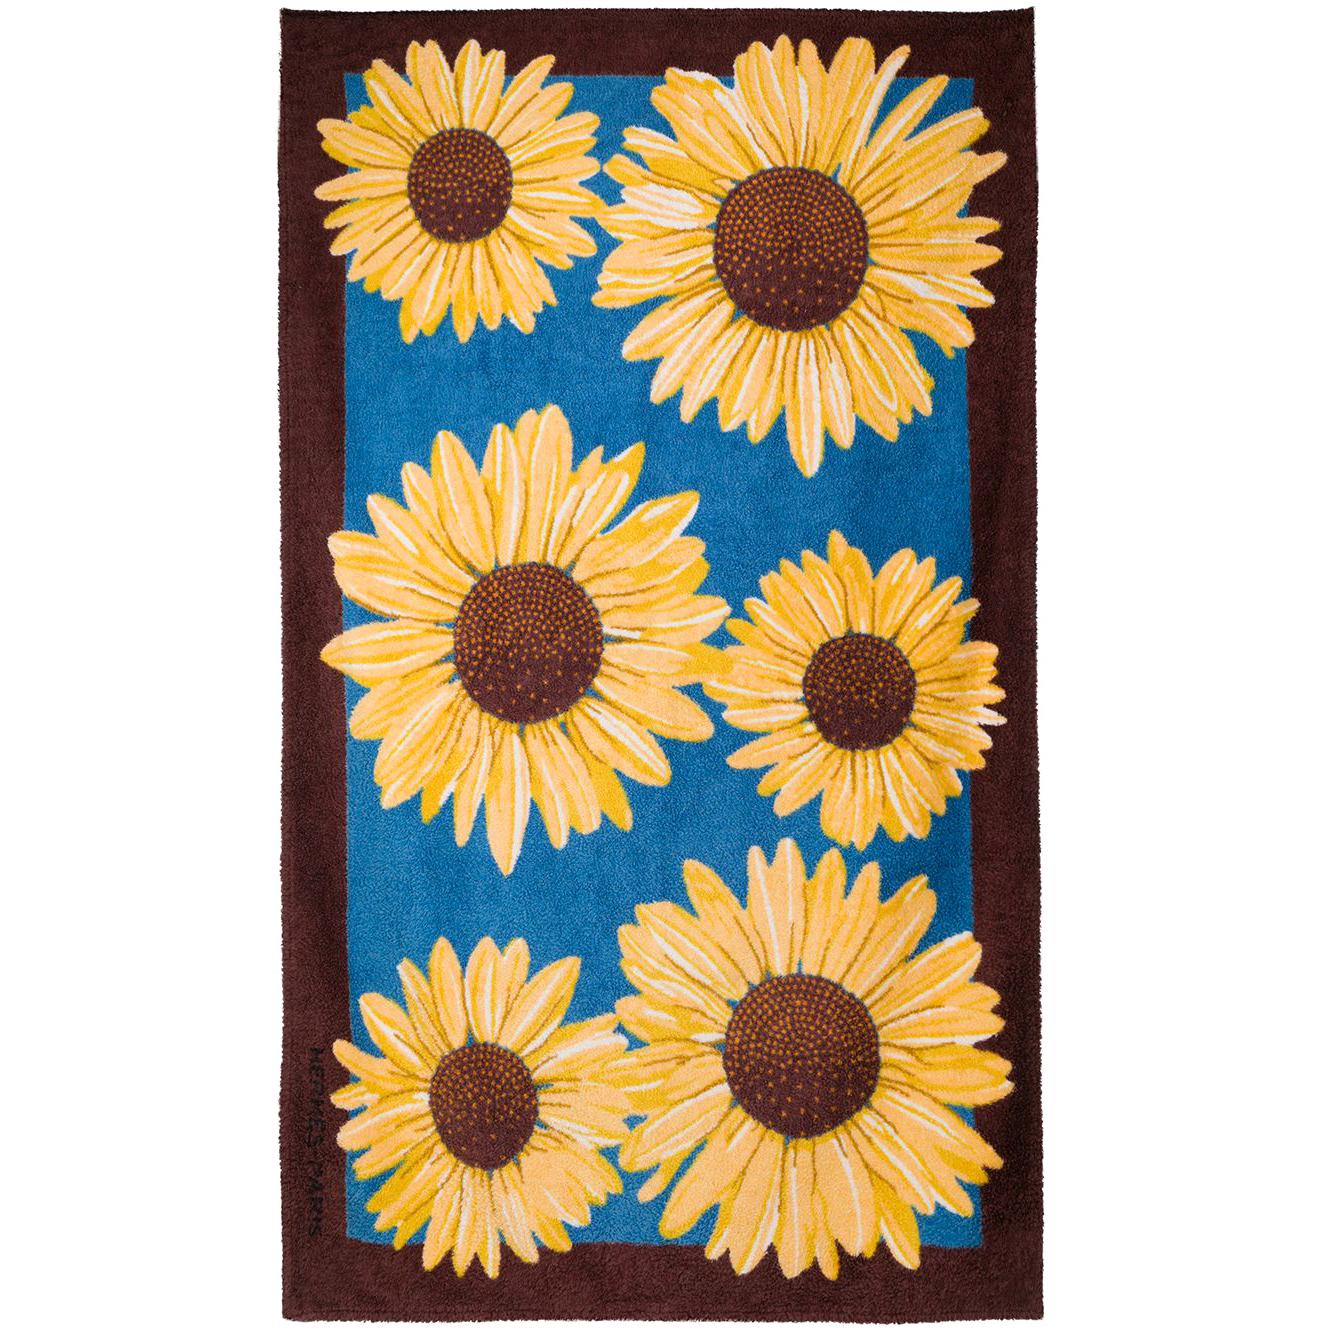 Hermes Sunflowers Cotton Beach Towel